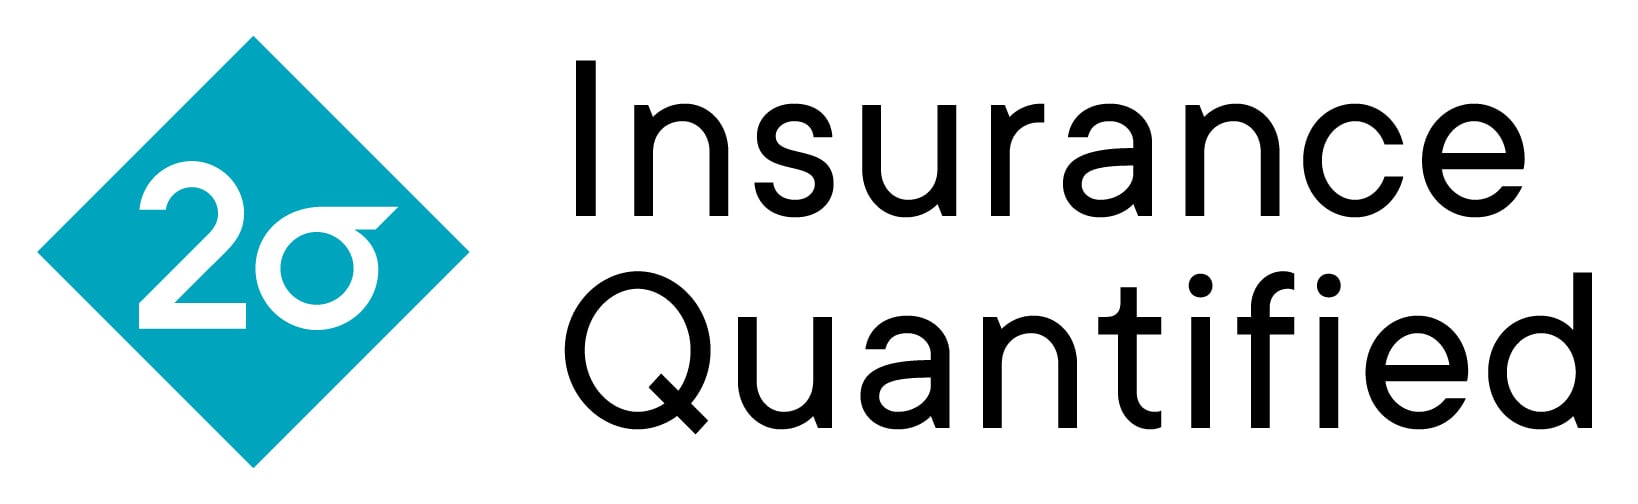 Two Sigma Insurance Quantified